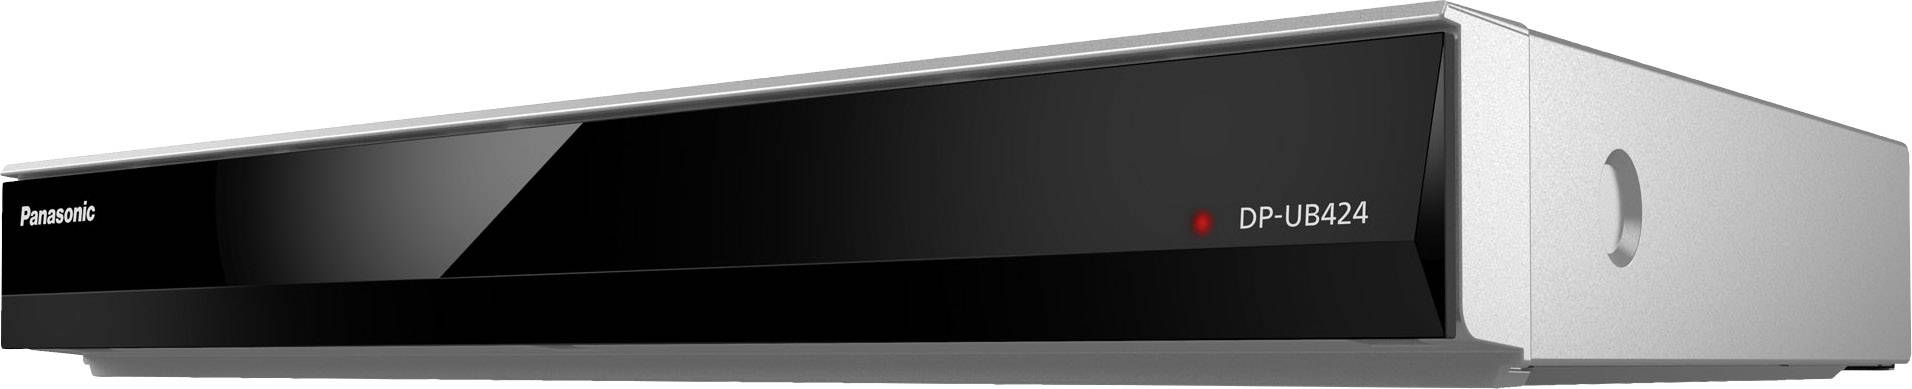 Assistan kaufen unterstützt Amazon Ultra unterstützt Panasonic Google DP-UB424 TV, 4K Smart Blu-ray-Player Alexa, WLAN, UHD HD,